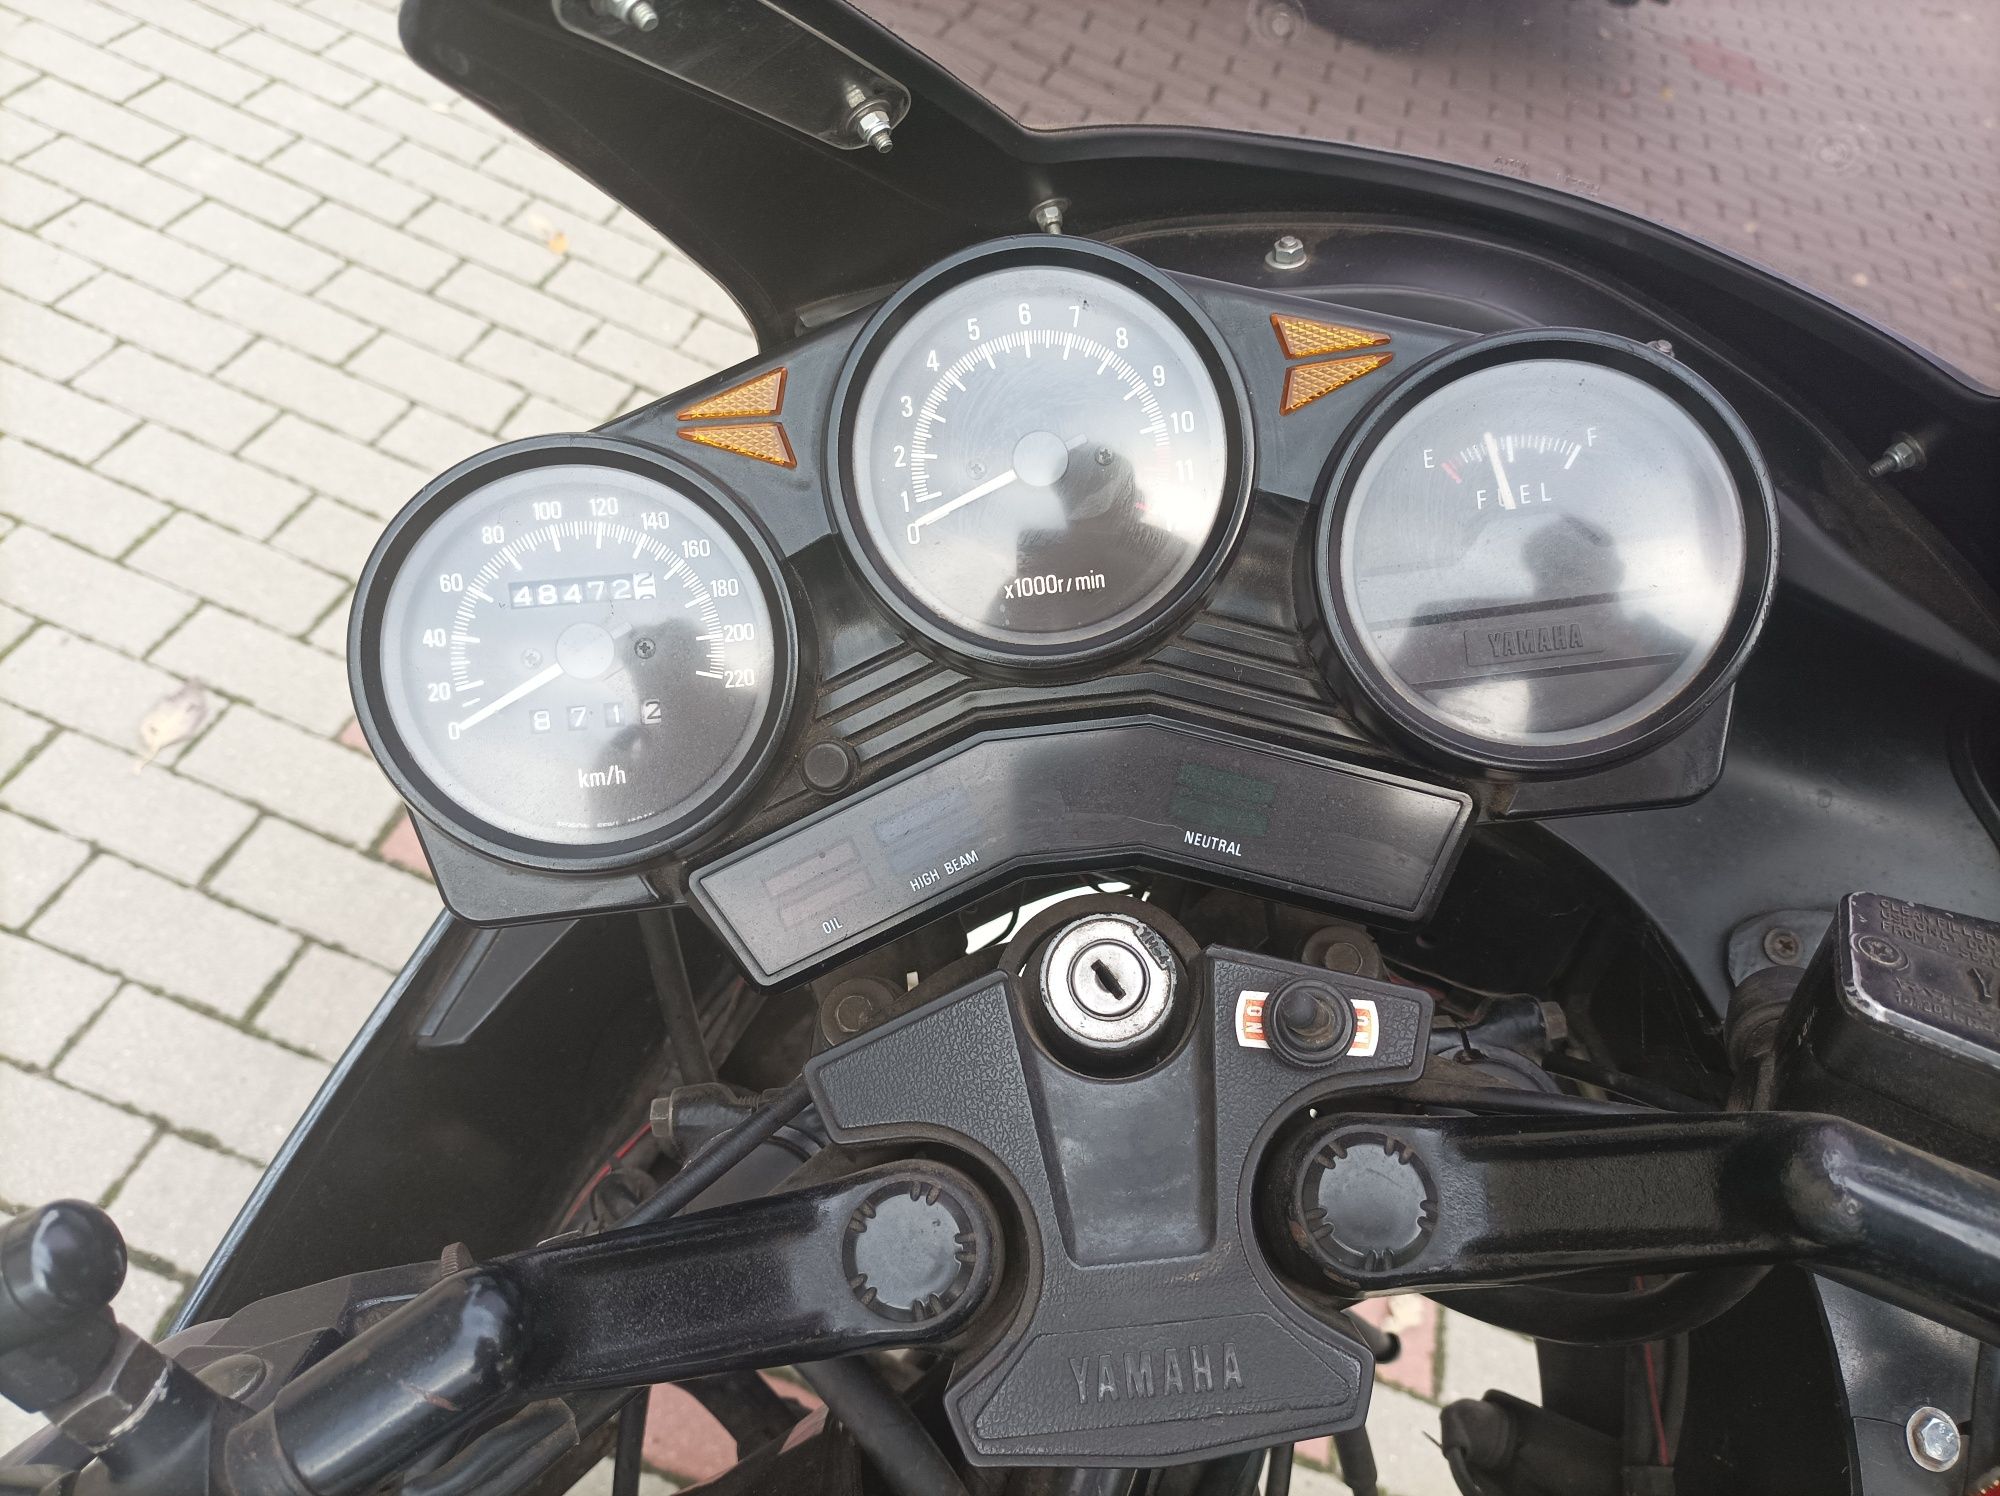 Motocykl Yamaha XJ 600